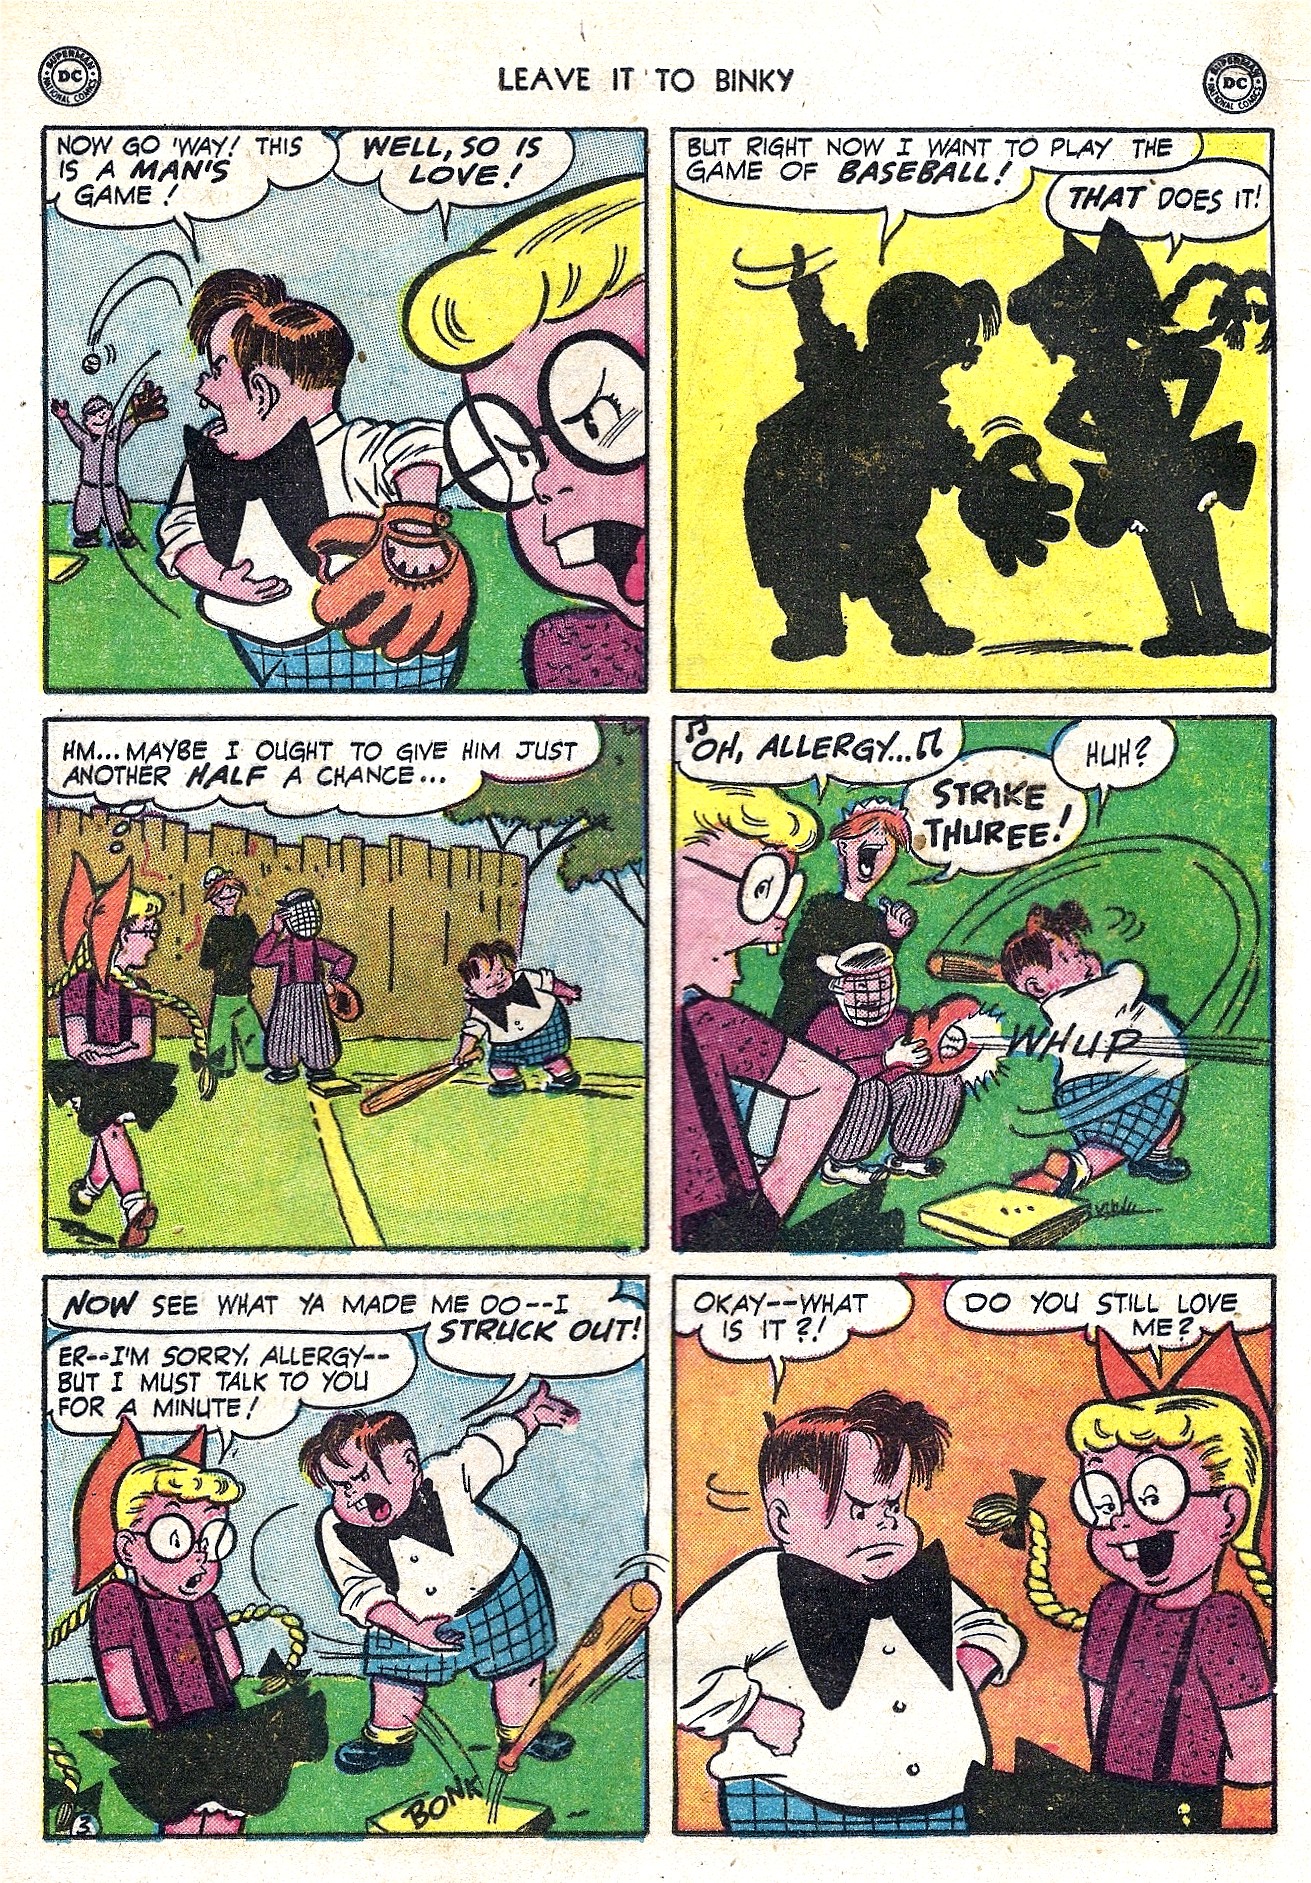 Read online Leave it to Binky comic -  Issue #16 - 37